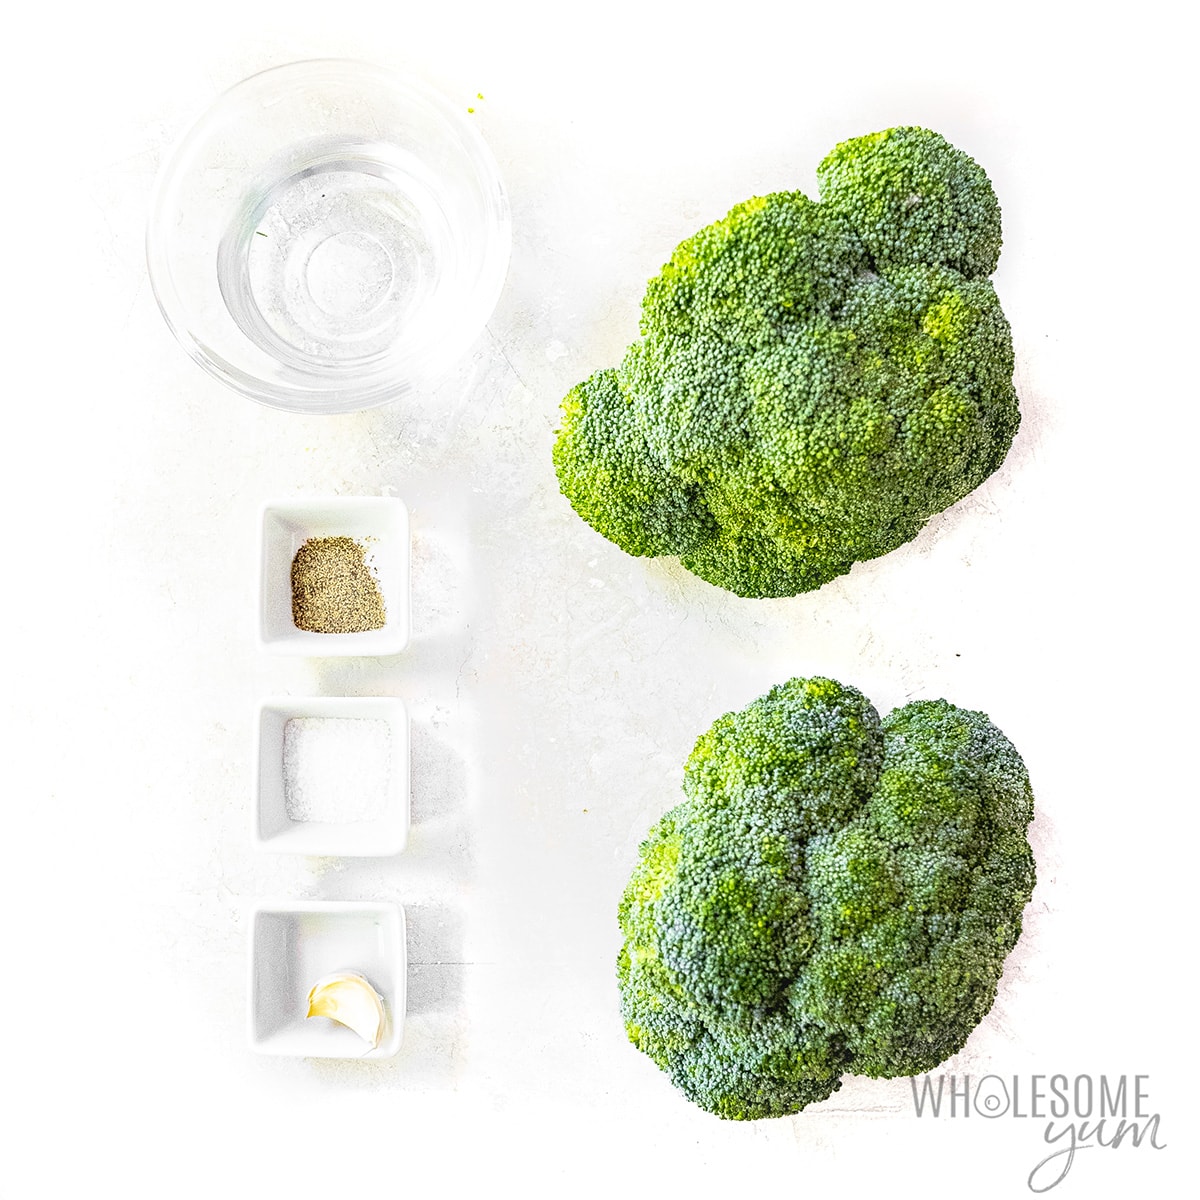 Instant Pot steamed broccoli ingredients.